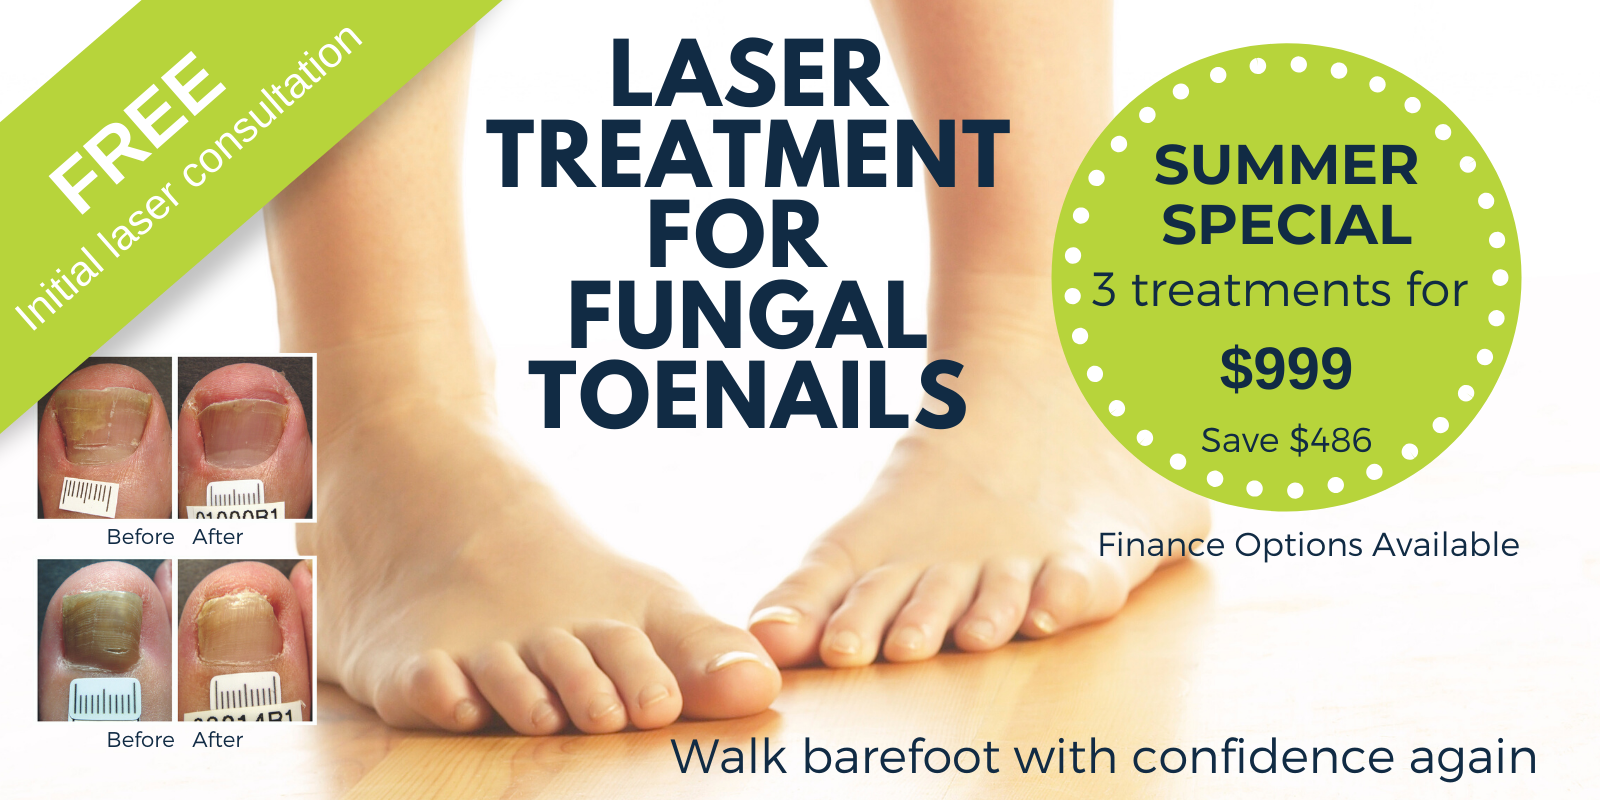 Fungal Nail Infection Treatment Laser | Foot Mechanics New Zealand